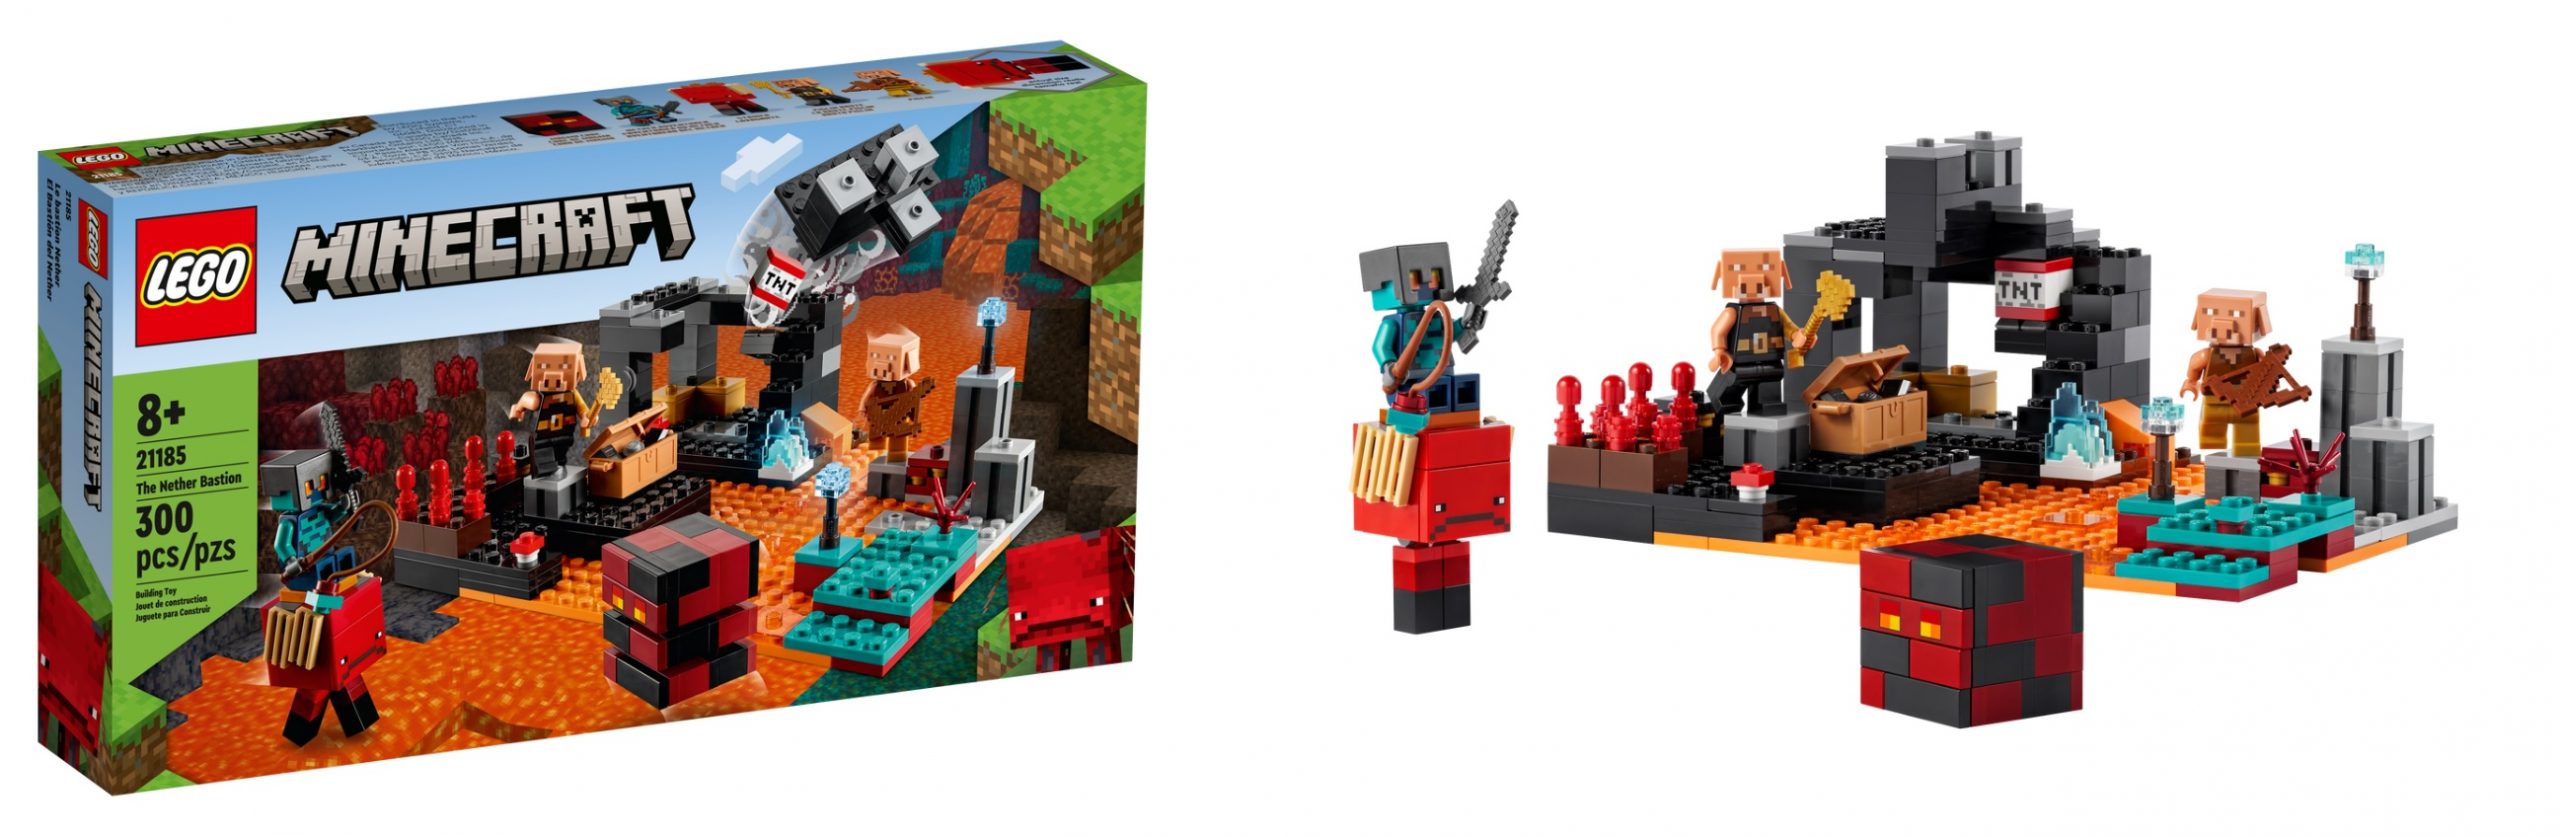 LEGO Minecraft Summer June 2022 Set Images, Prices & Release Dates ...